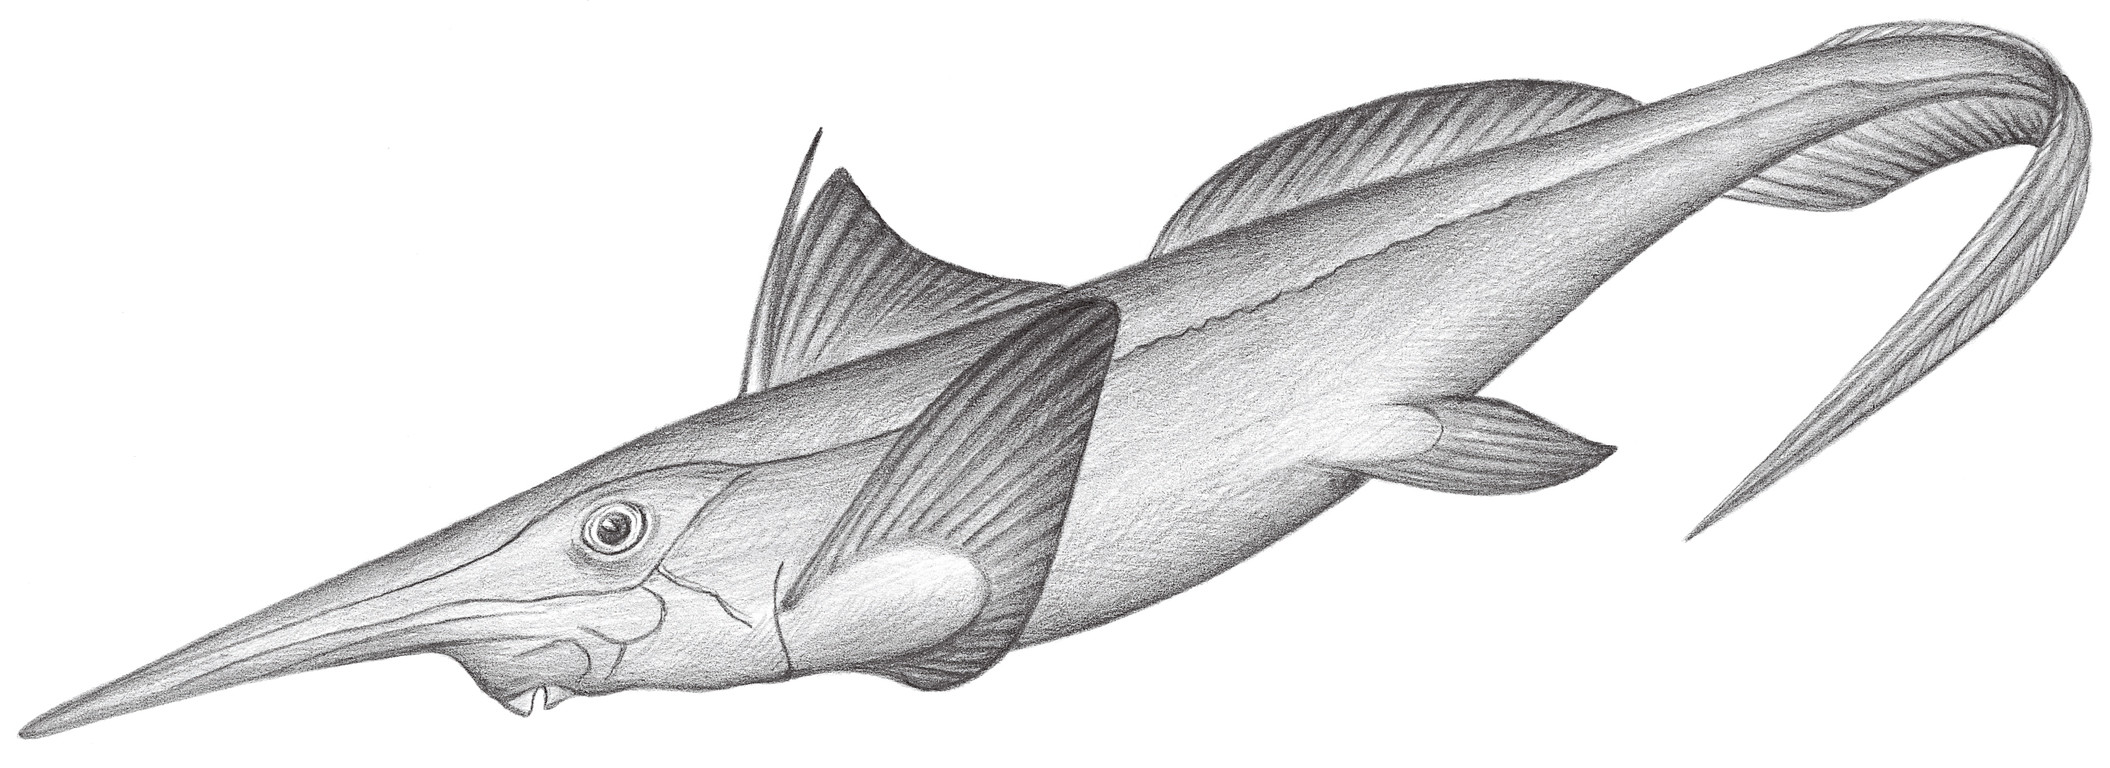 13.	太平長吻銀鮫 Rhinochimaera pacifica (Mitsukuri, 1895)